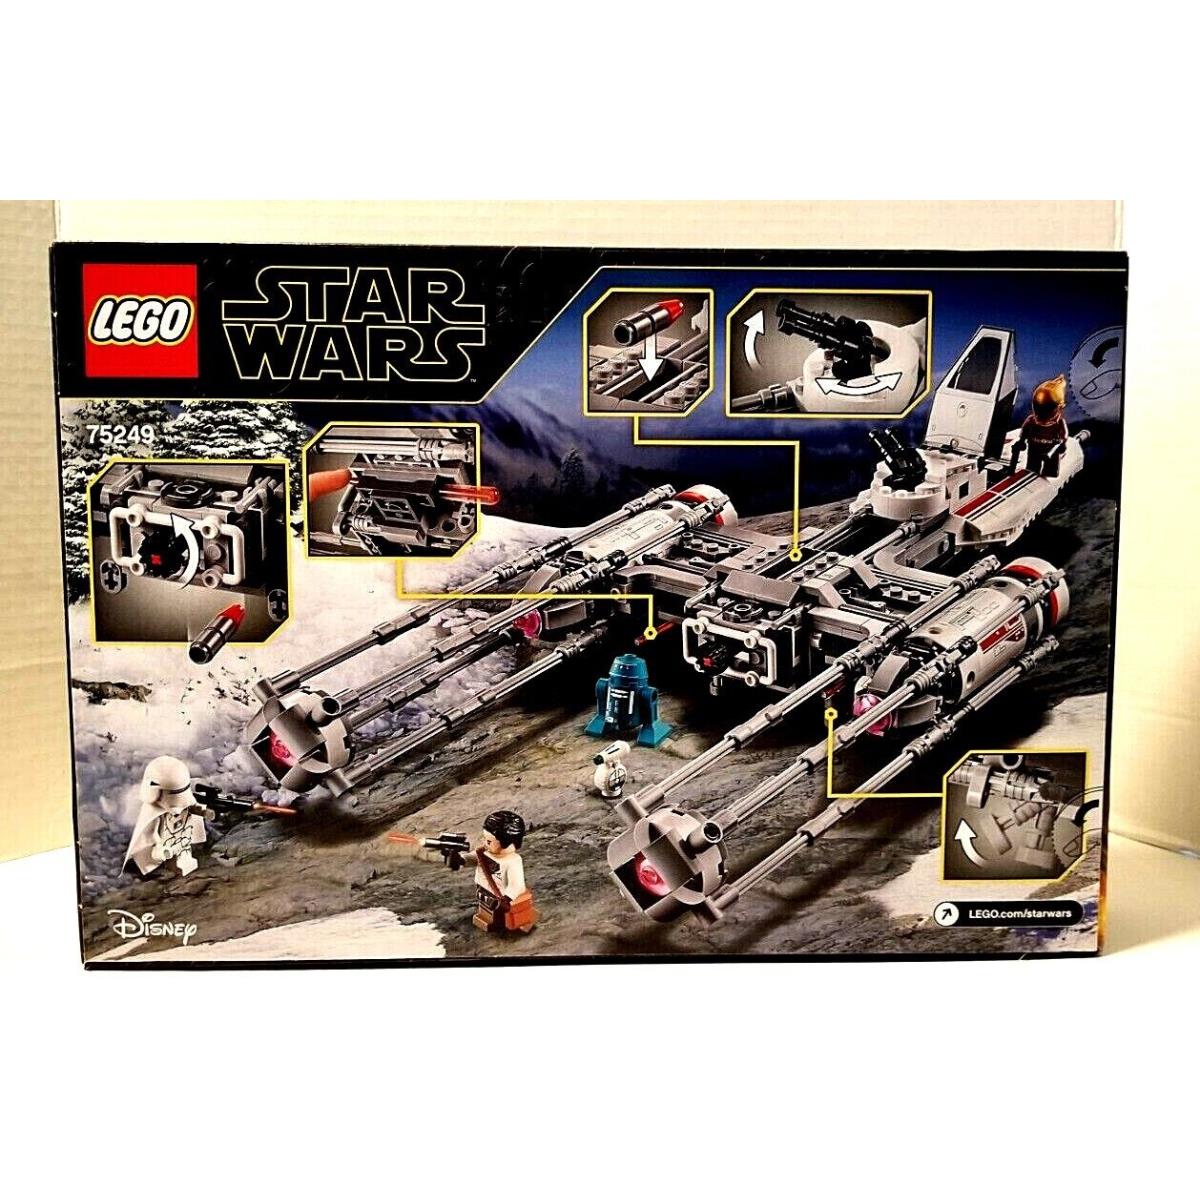 Lego Star Wars 75249 Resistance Y-wing Starfighter